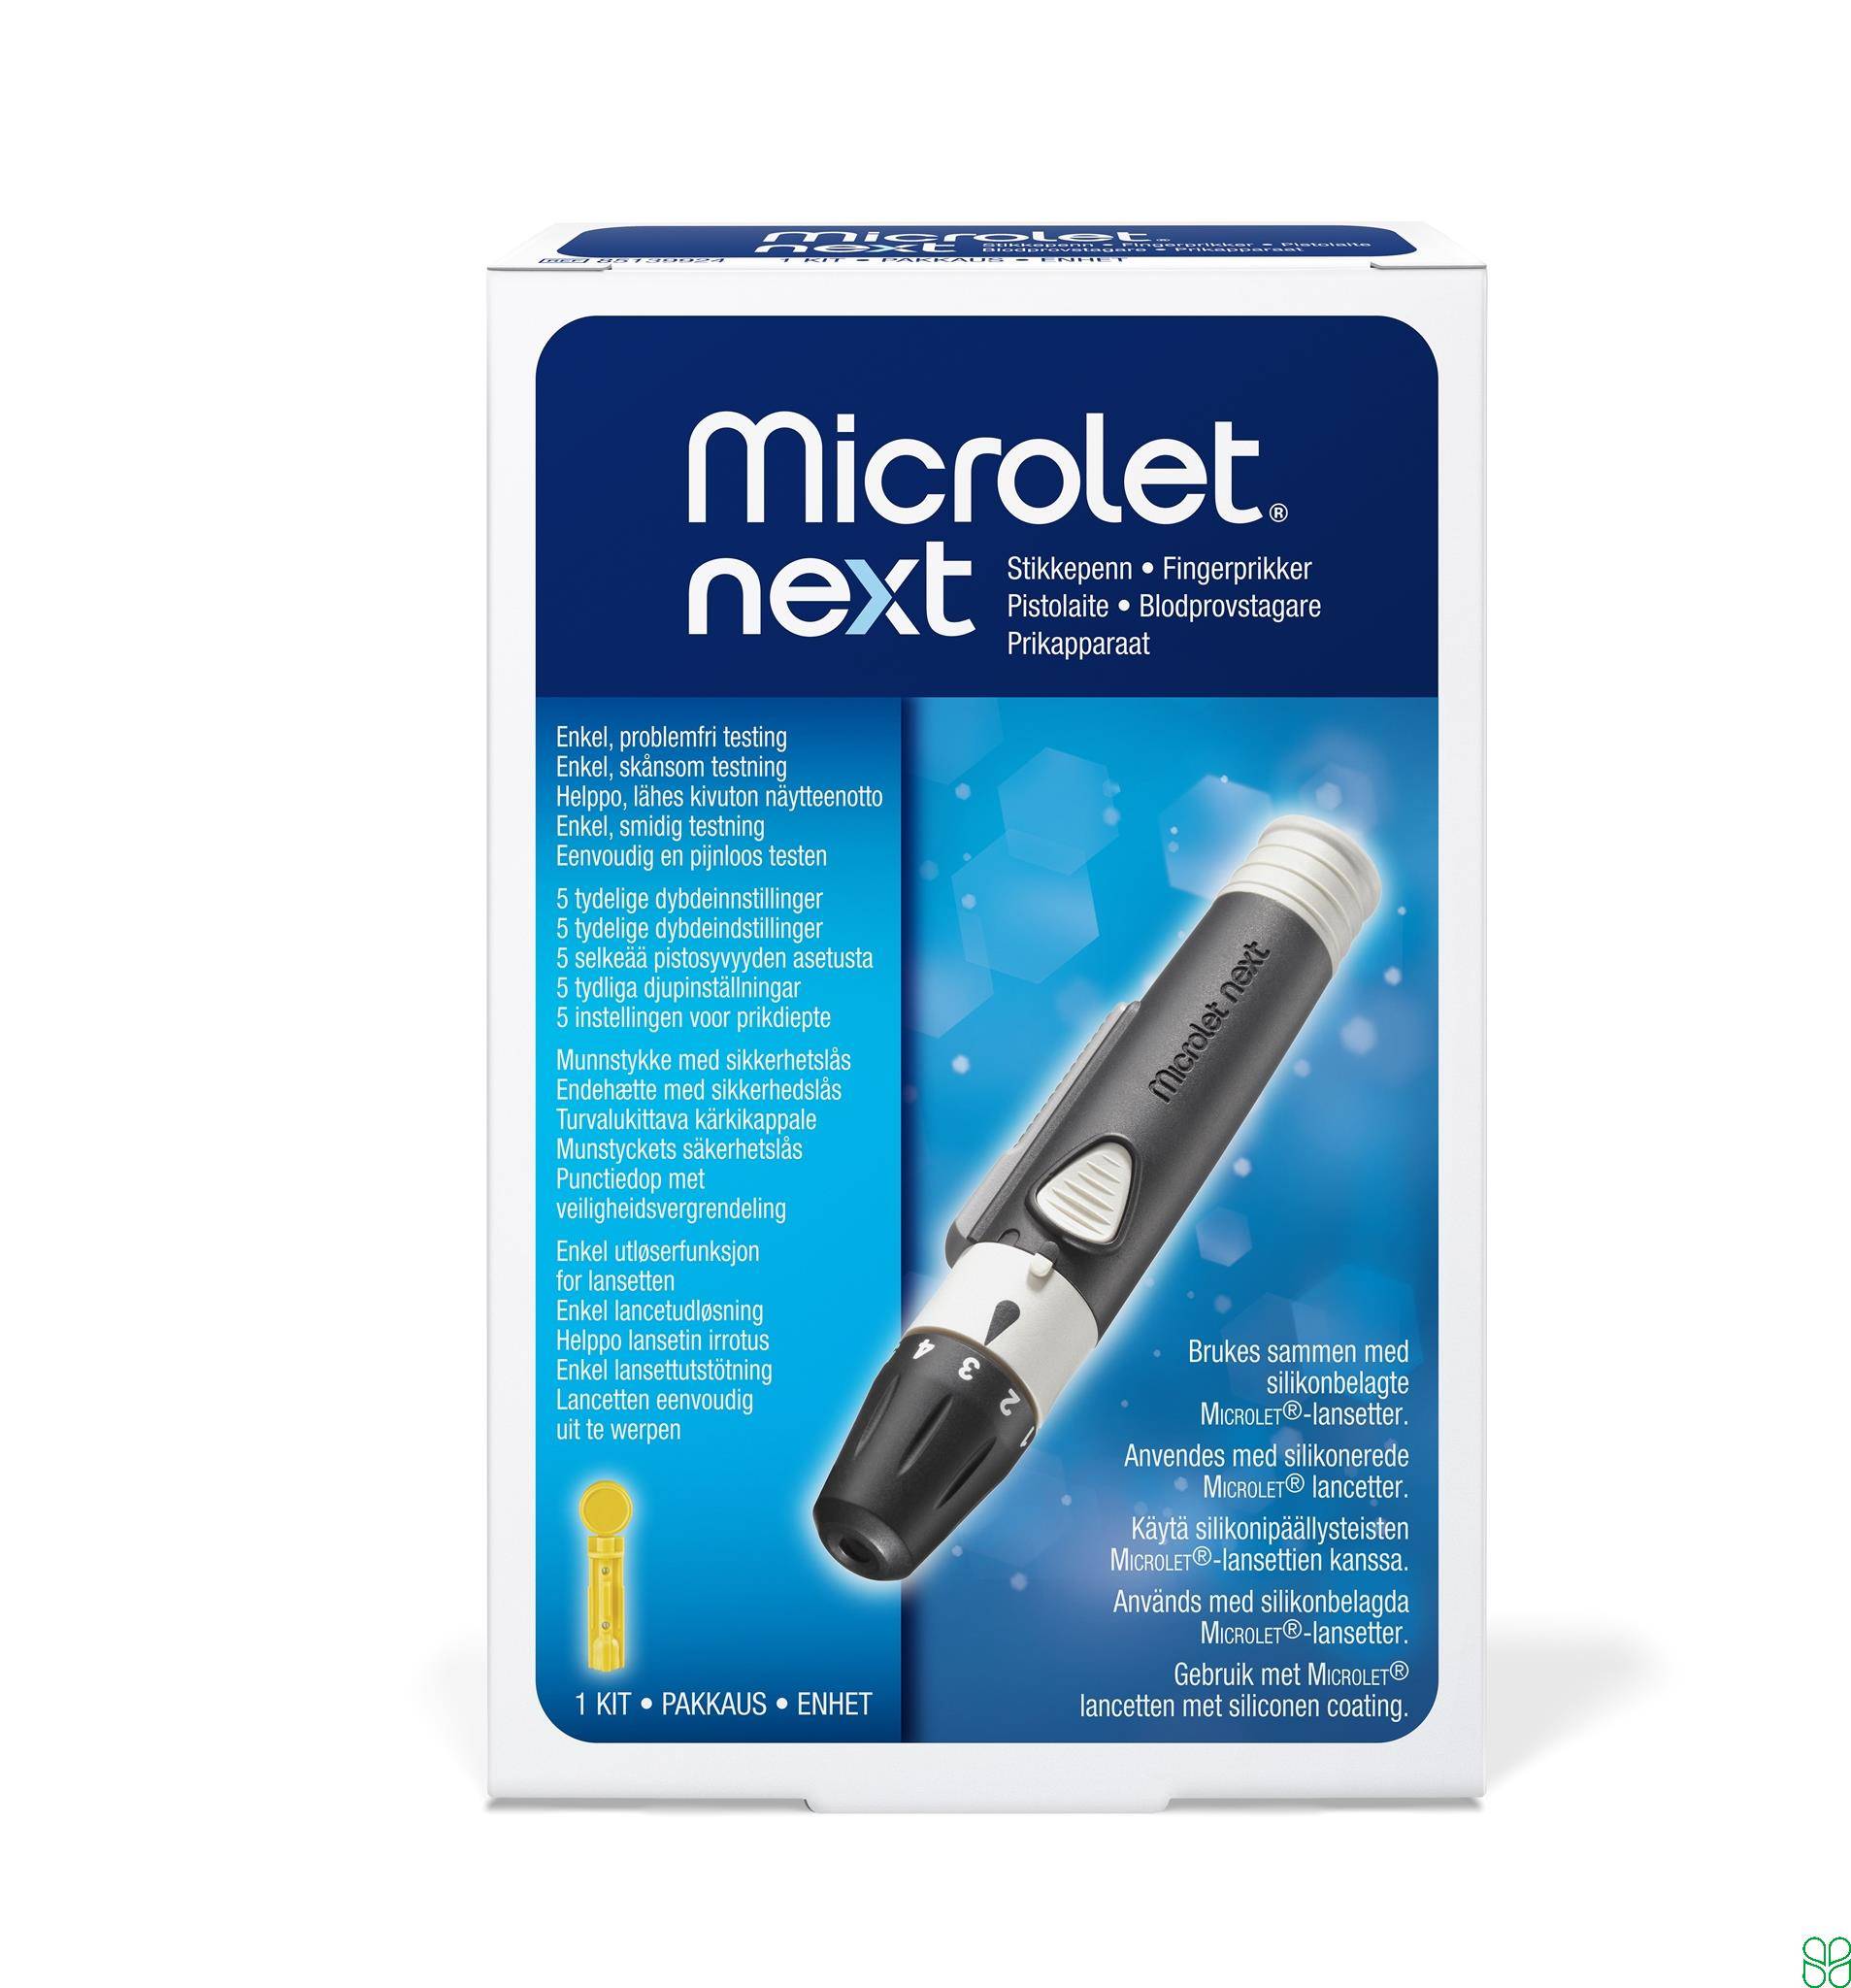 Microlet Next Prikapparaat